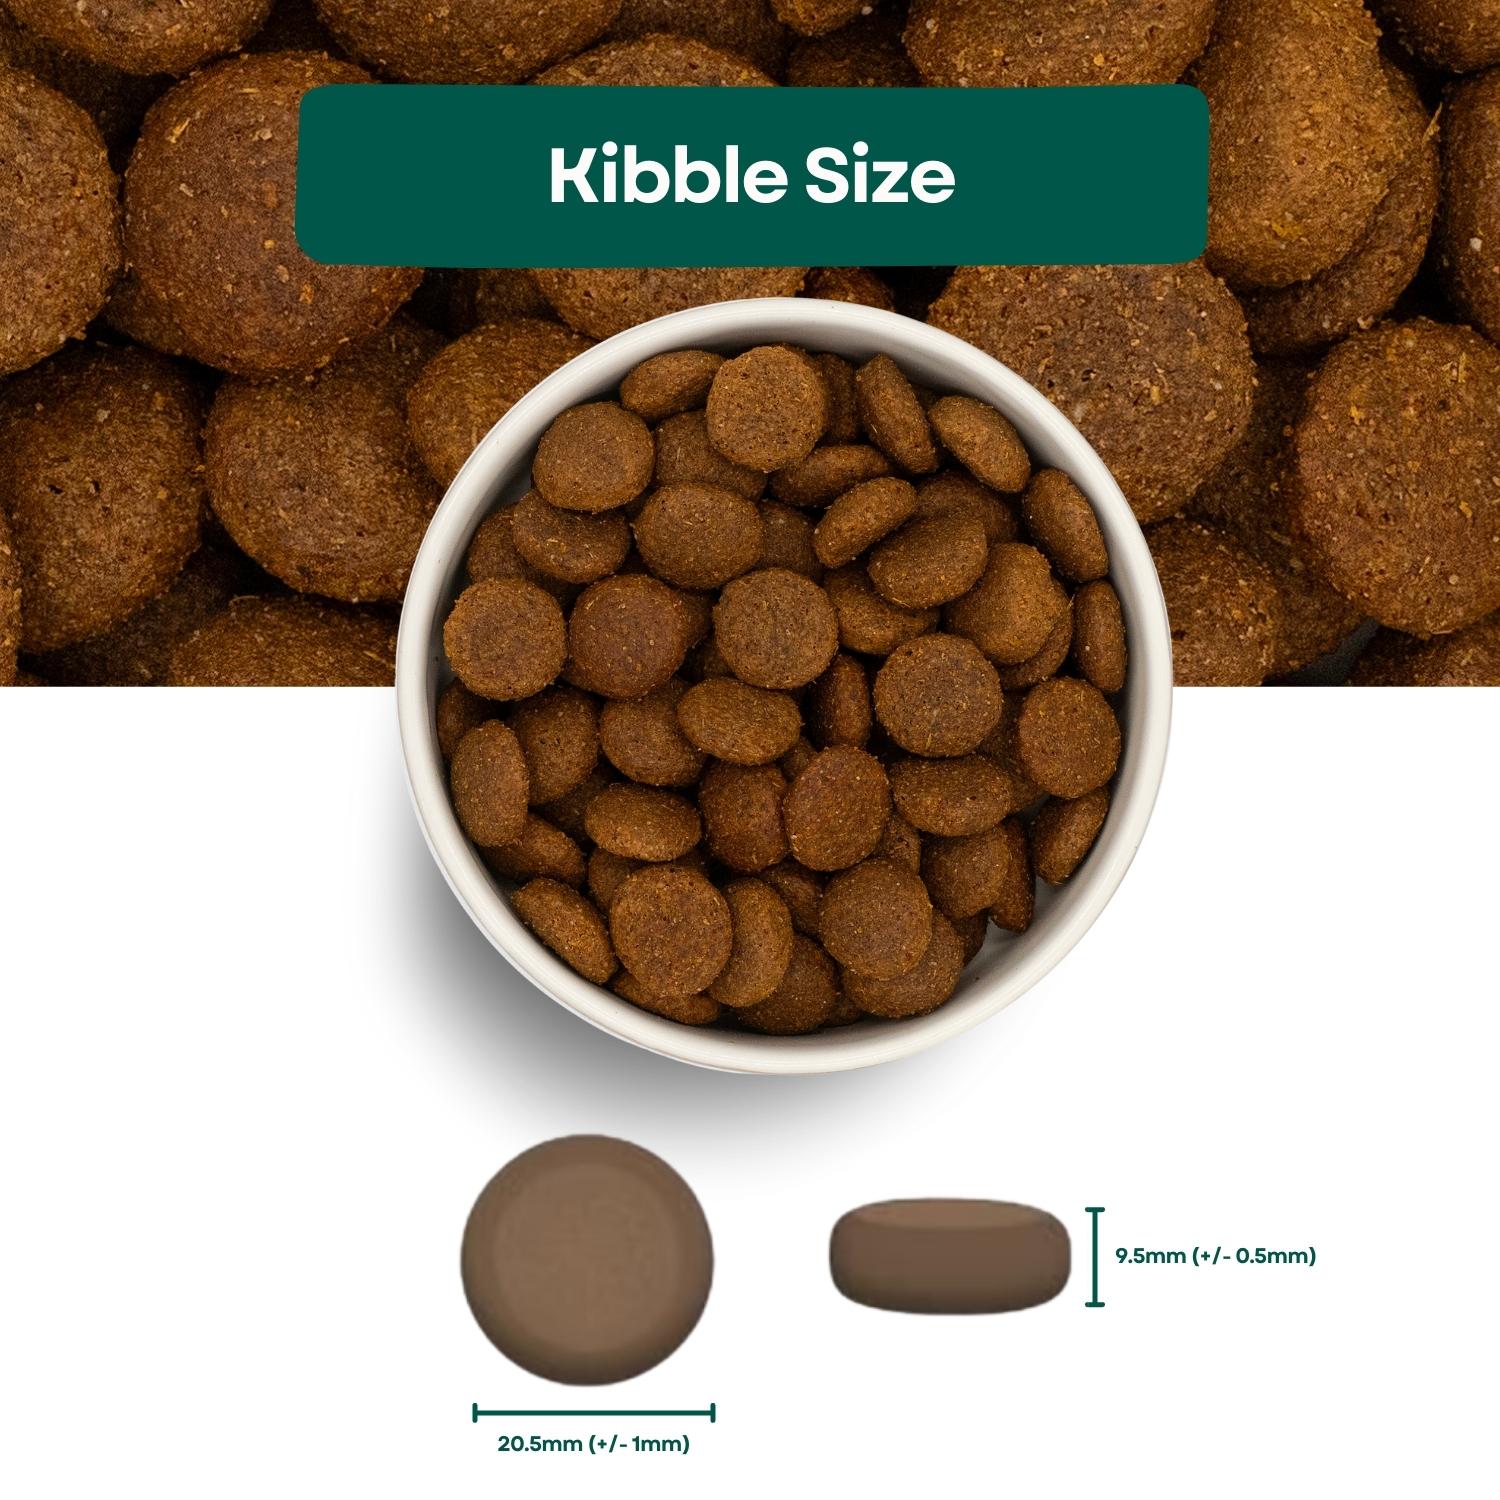 Kibble Size Super Premium Large Breed Adult Dog Food - Chicken & Rice